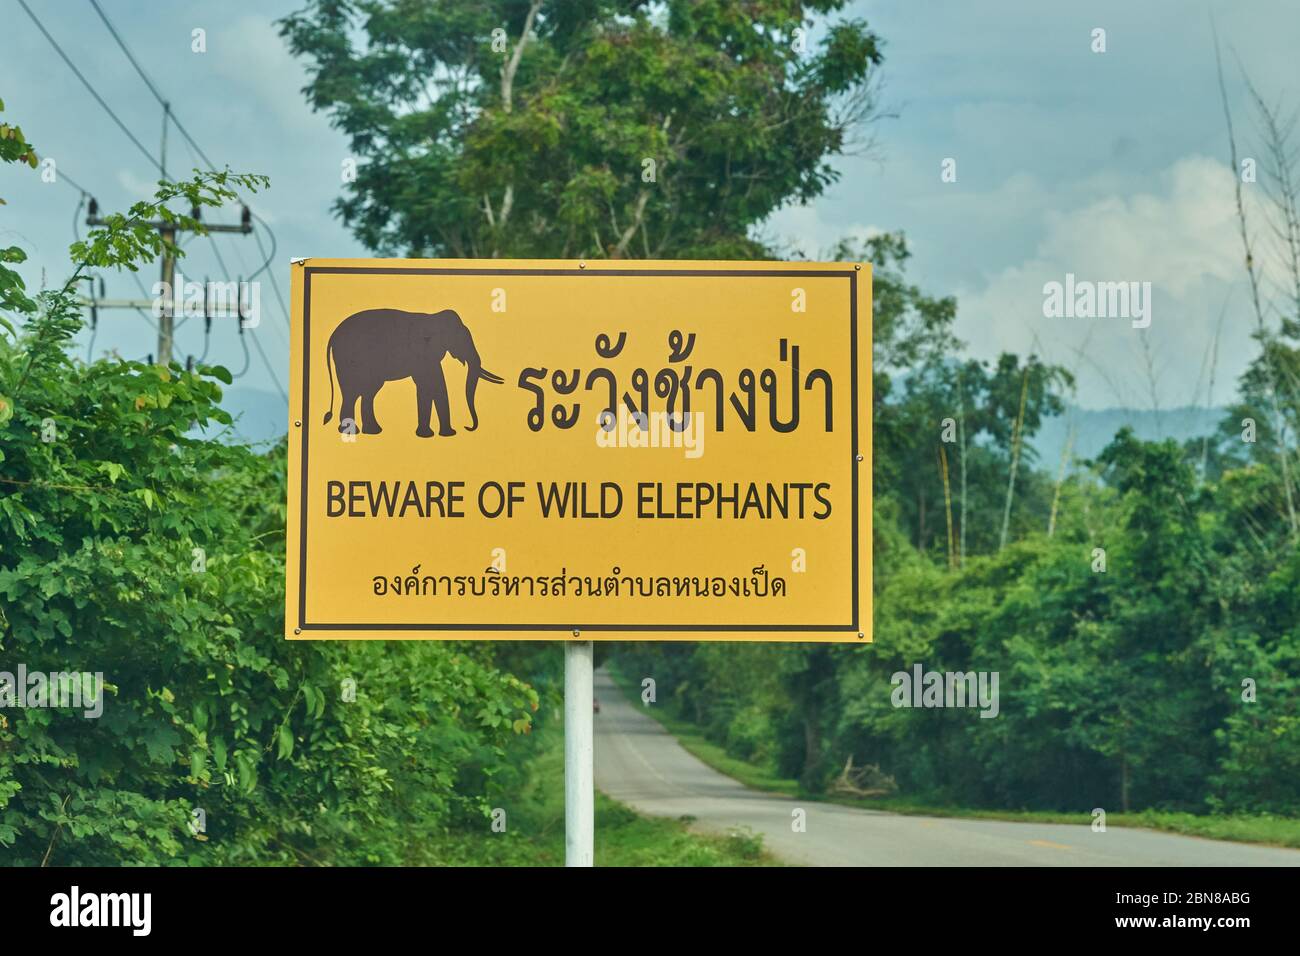 A road sign warning of wild elephants, taken in Kanchanaburi, Thailand. Stock Photo